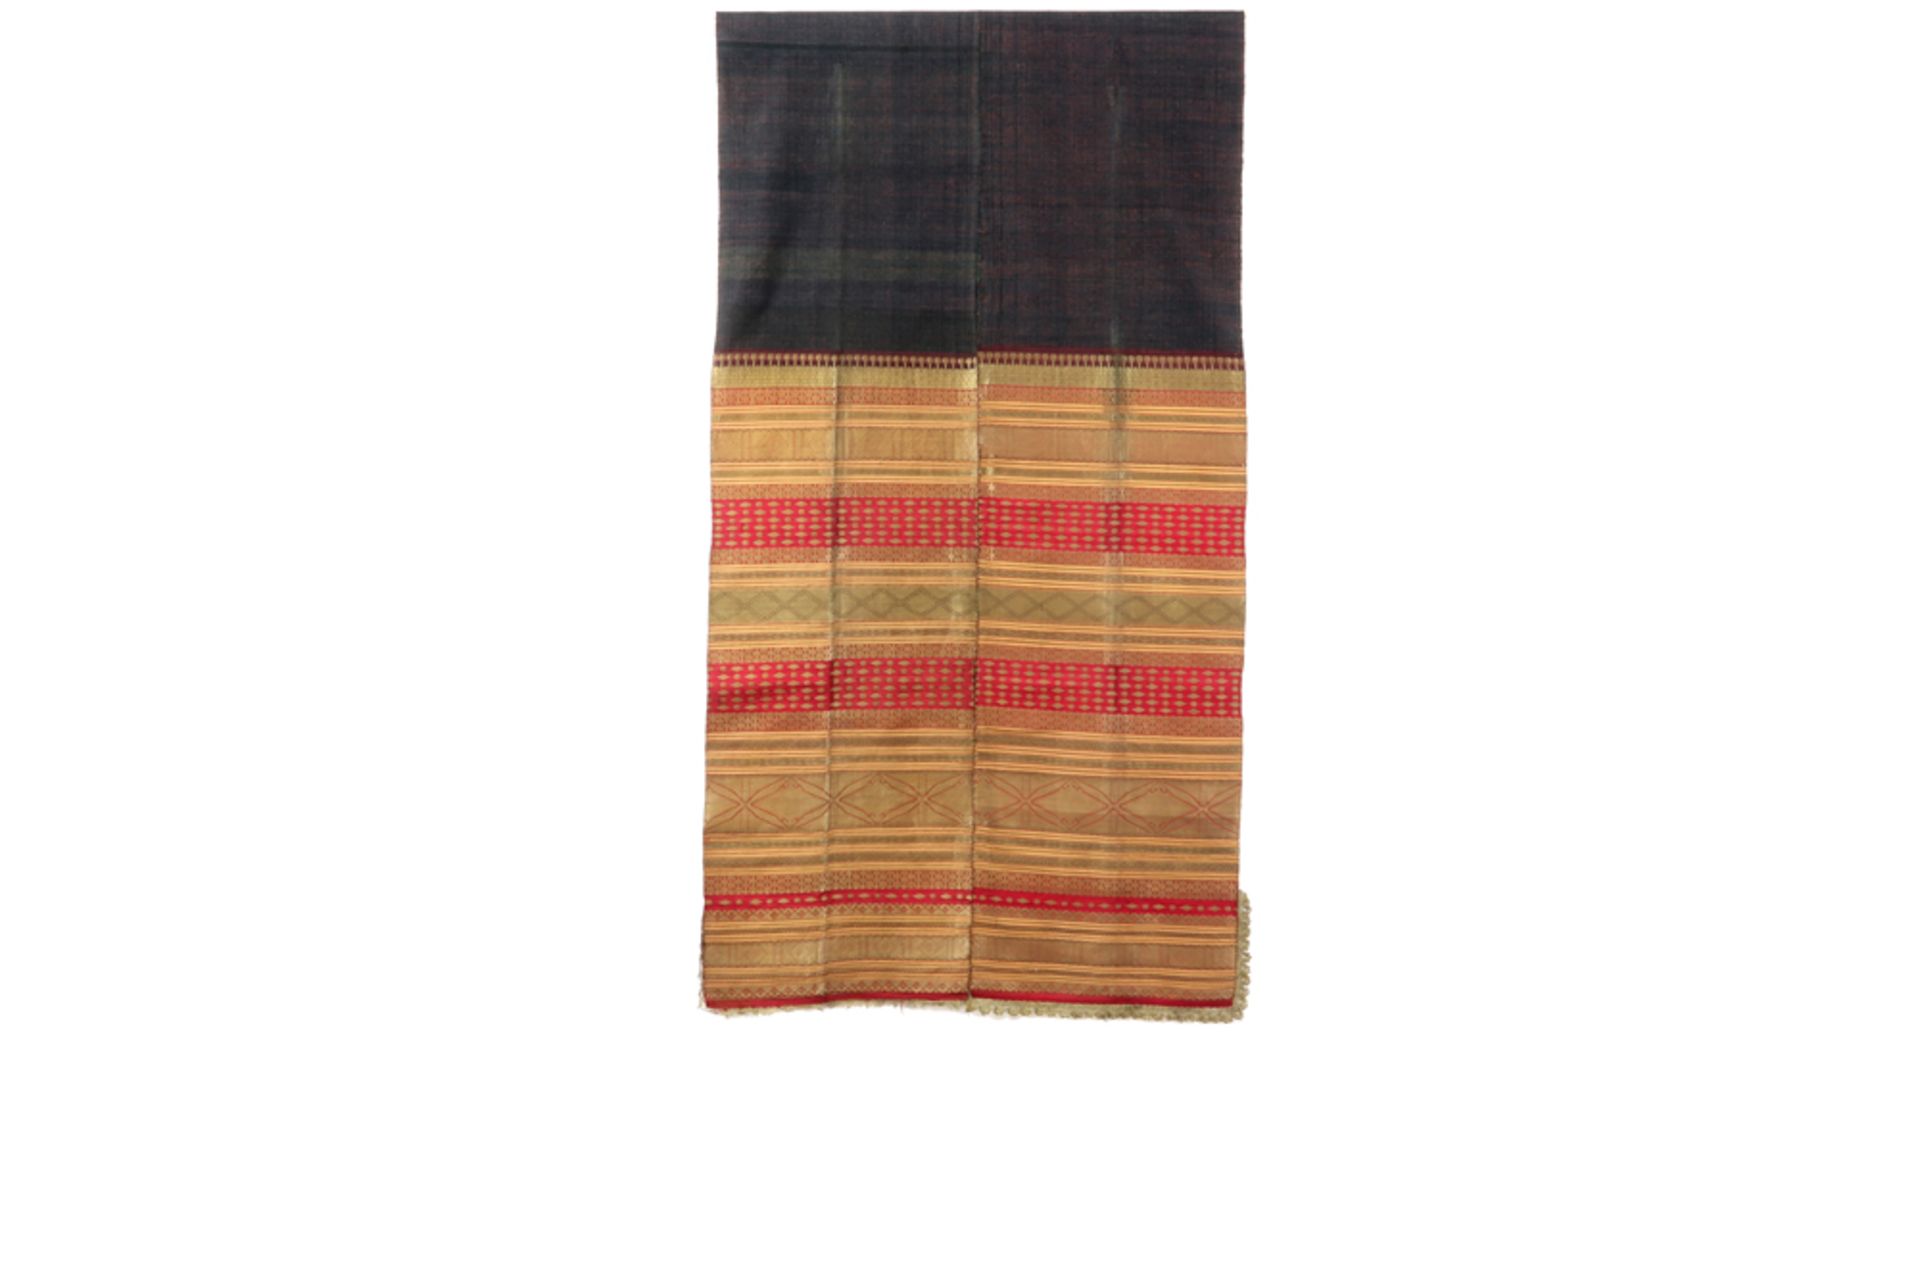 handwoven Indonesian sari with gold threat and typical geometric design || Indonesische sari in - Bild 2 aus 2